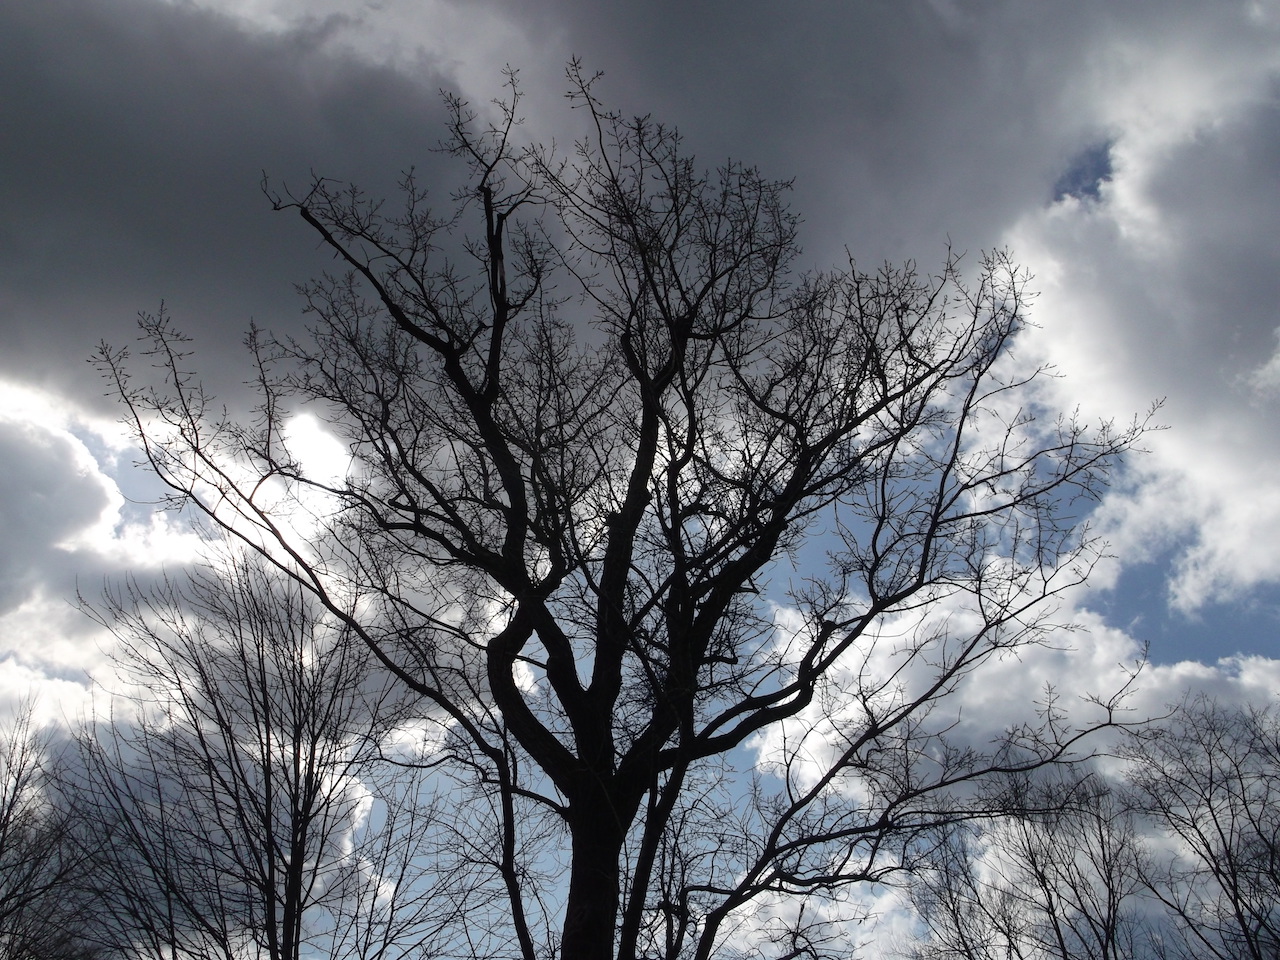 School-wide bondar challenge winner 2018-19 tree against cloudy sky